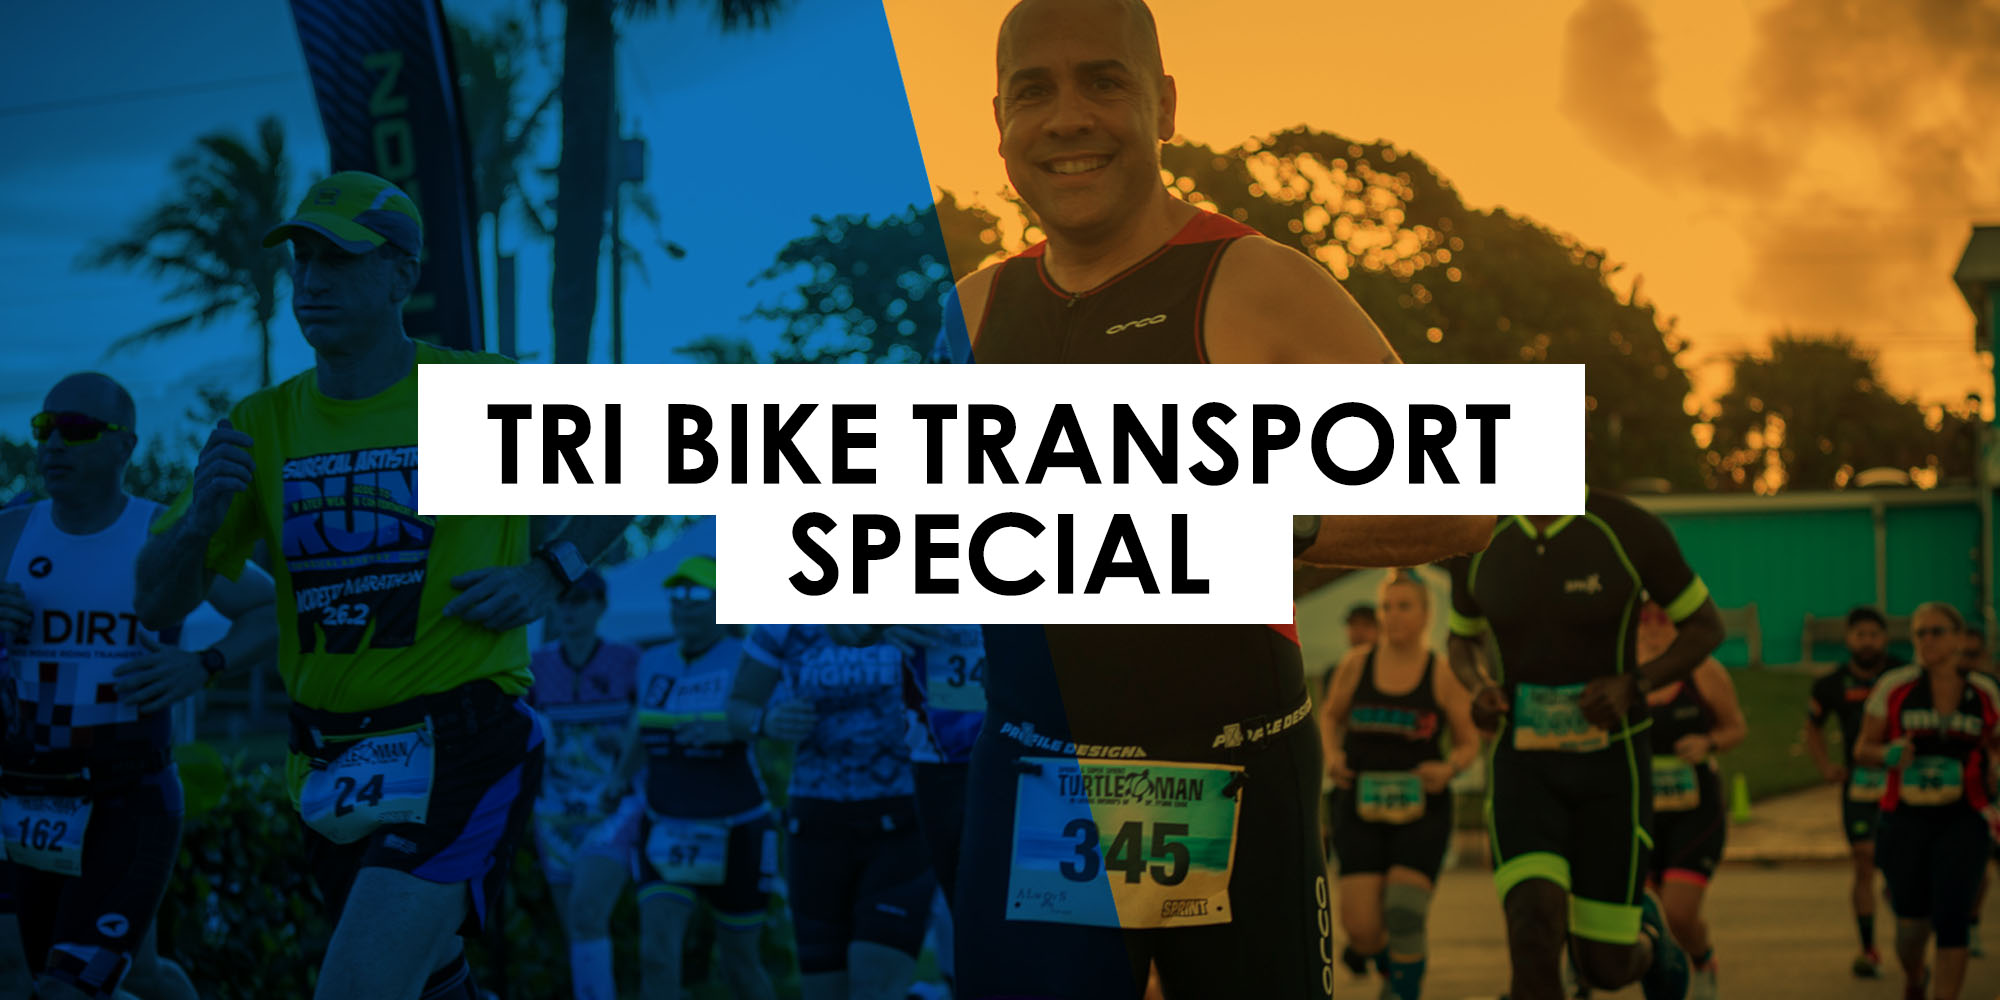 Tri Bike Transport Post-Race Bike Service Special